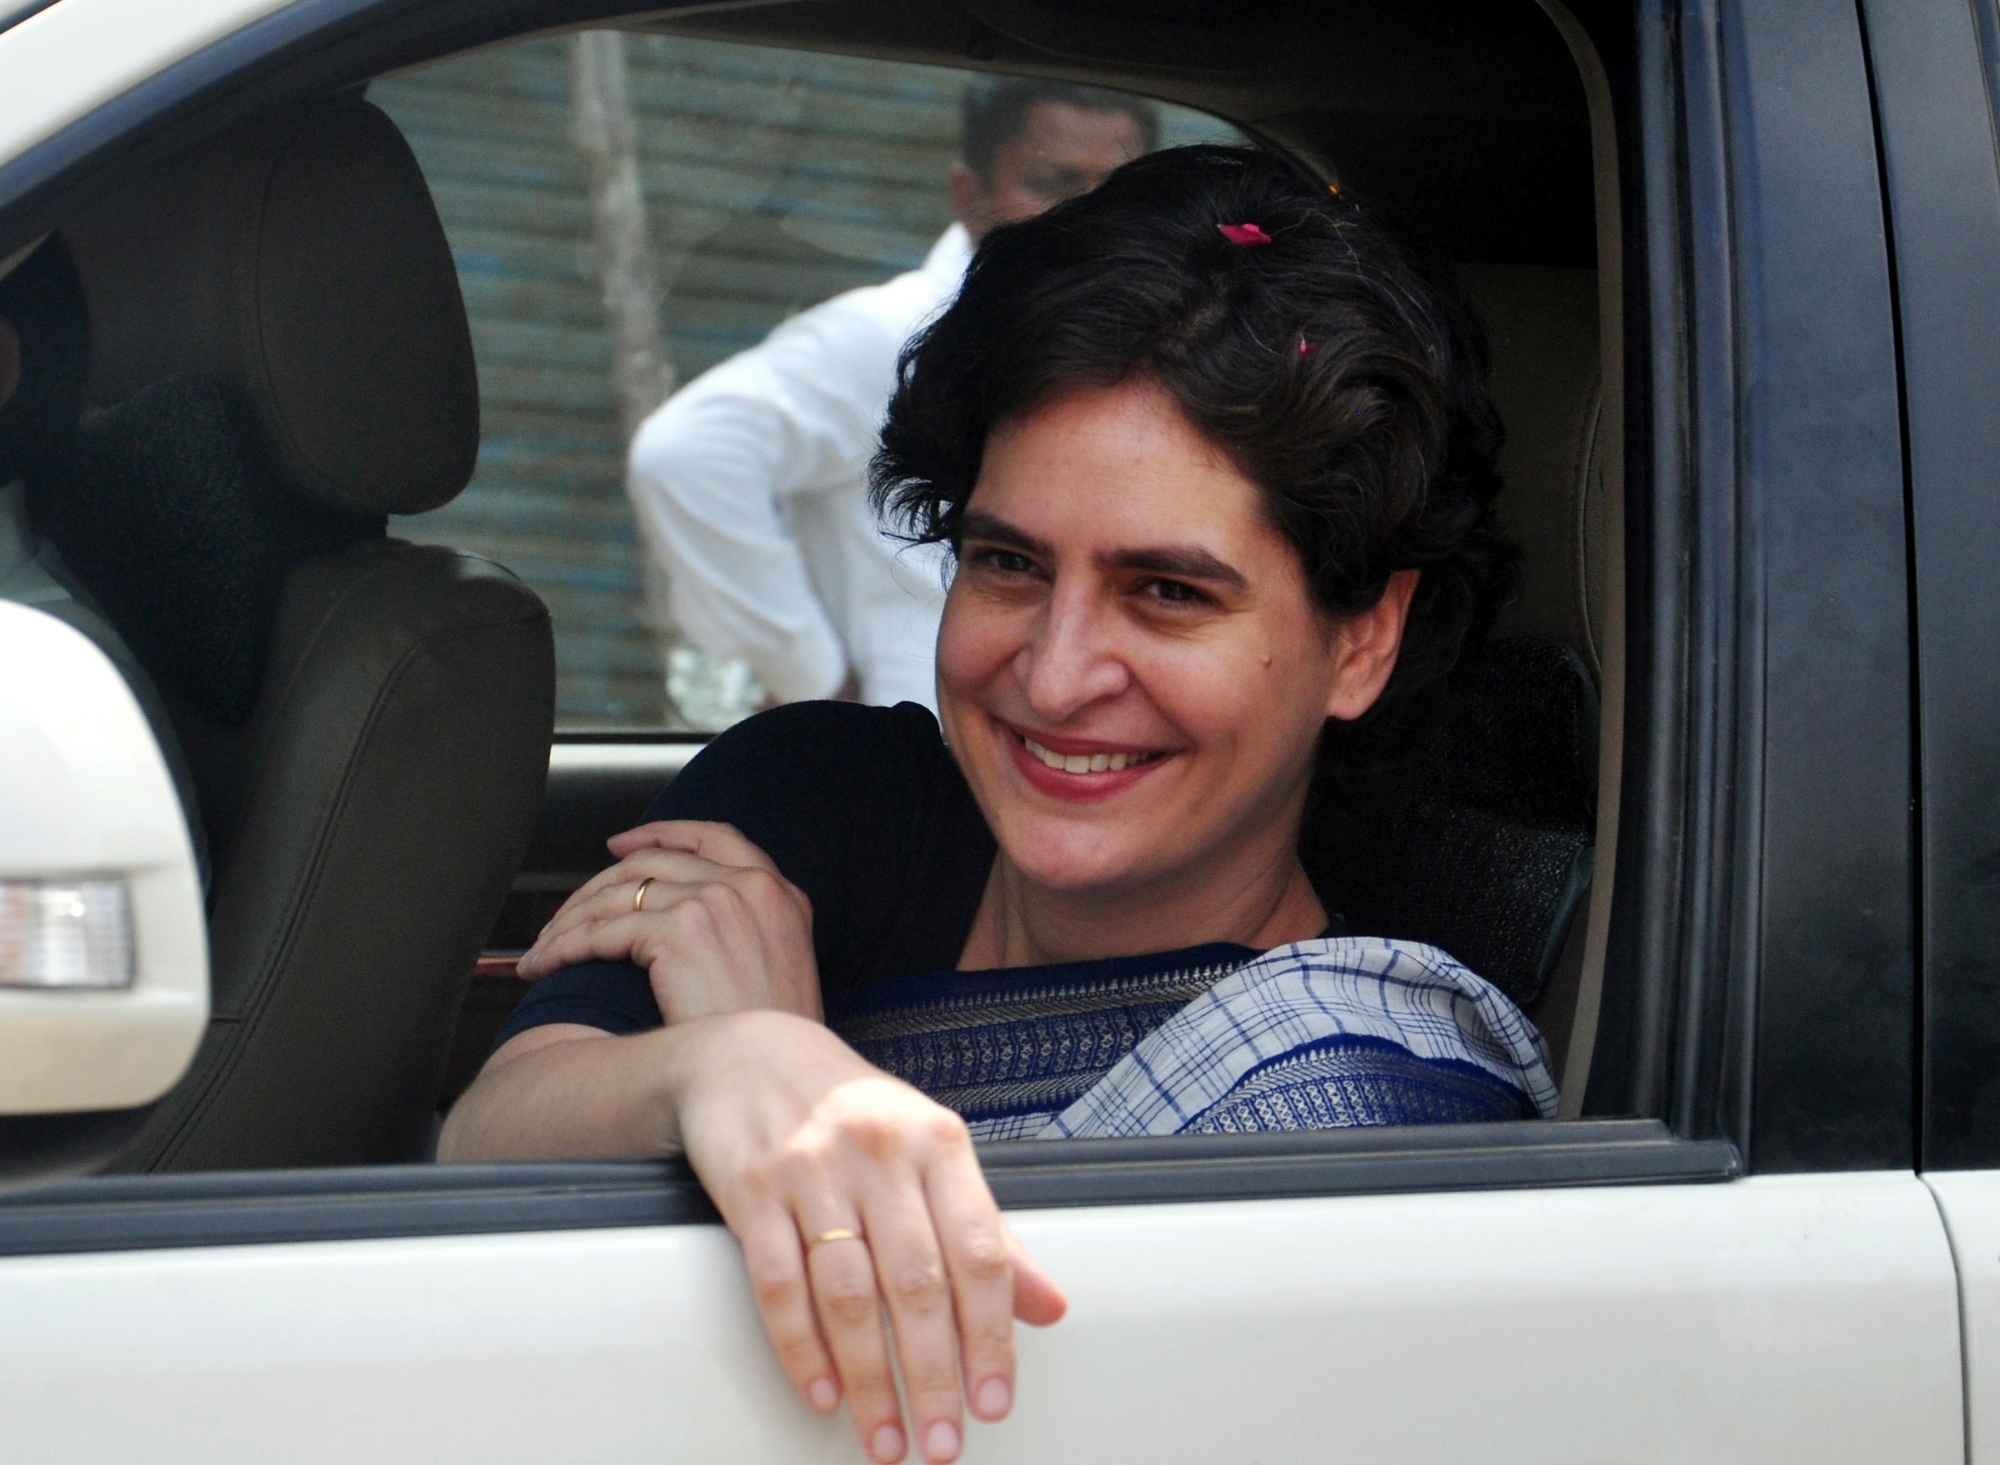 Congress mulls complaints over campaign against Priyanka to make politics safer for women